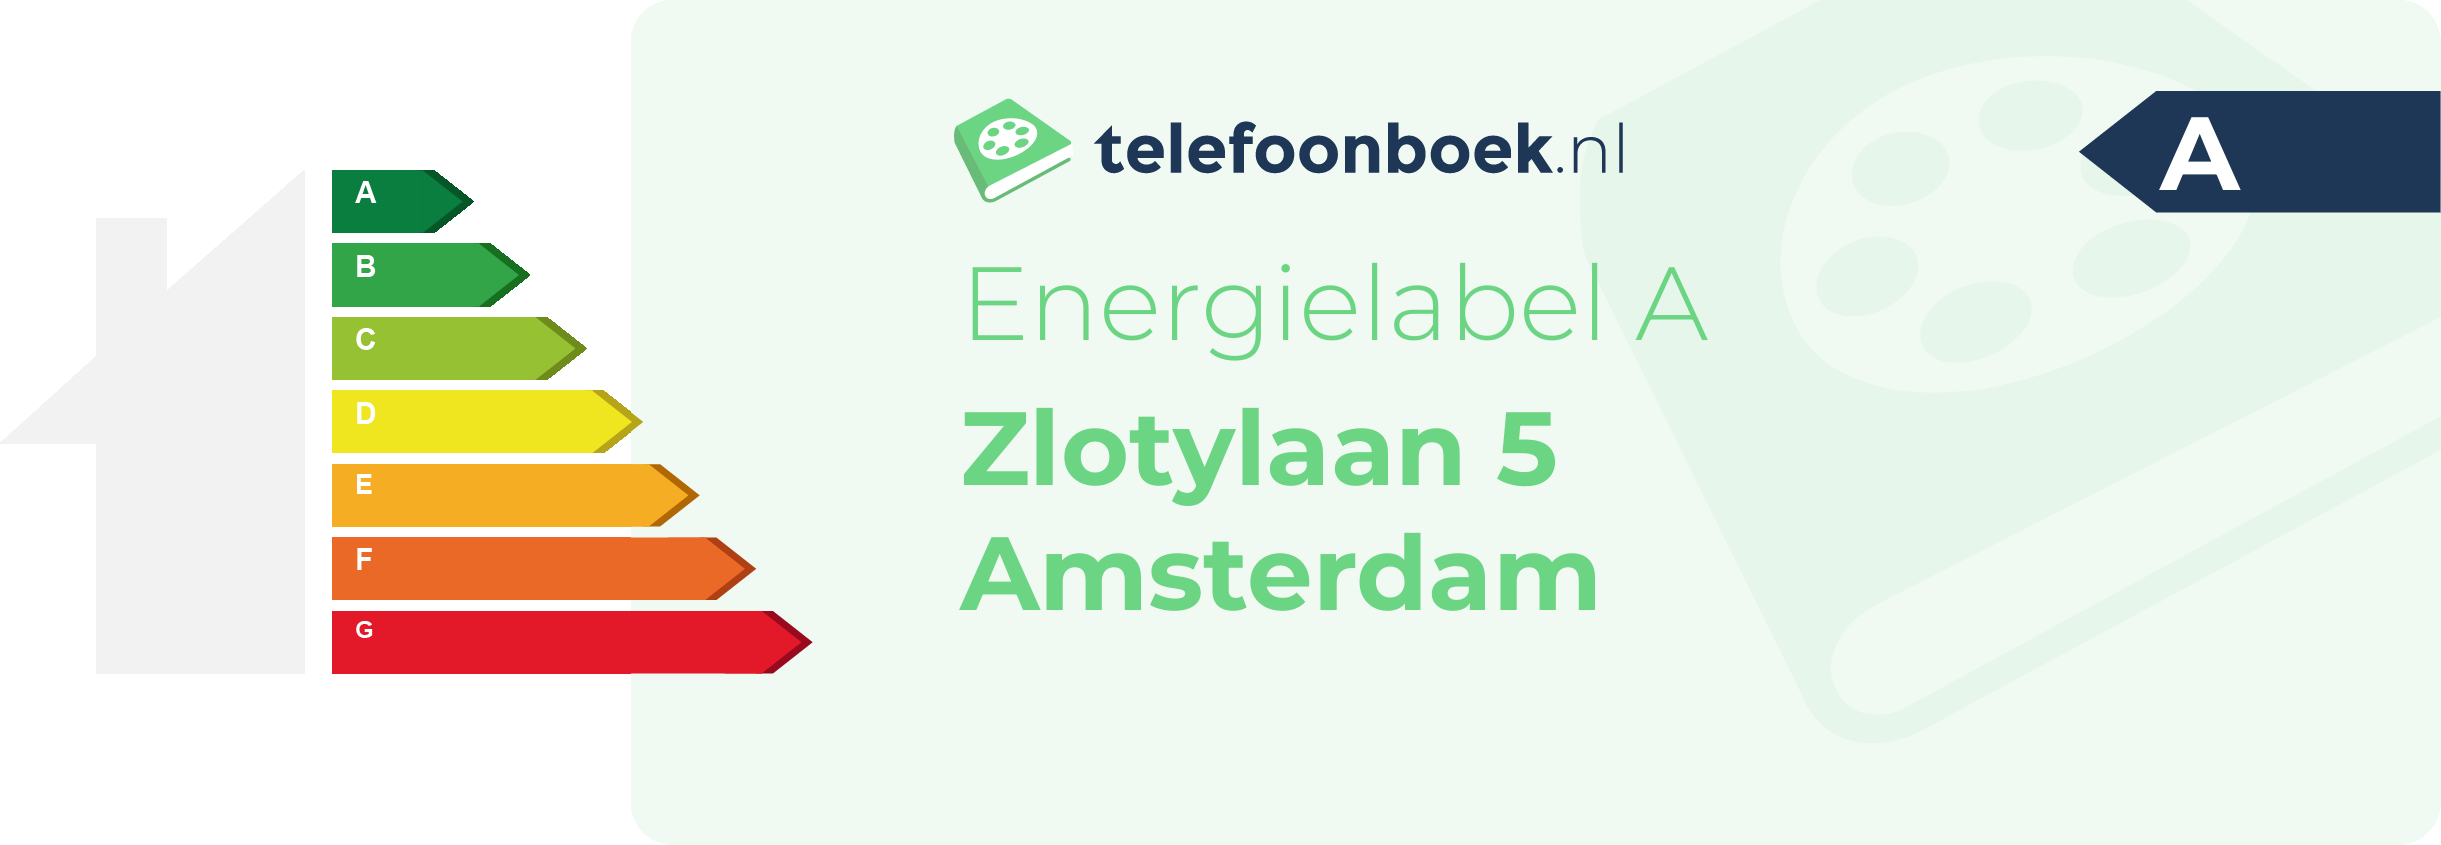 Energielabel Zlotylaan 5 Amsterdam